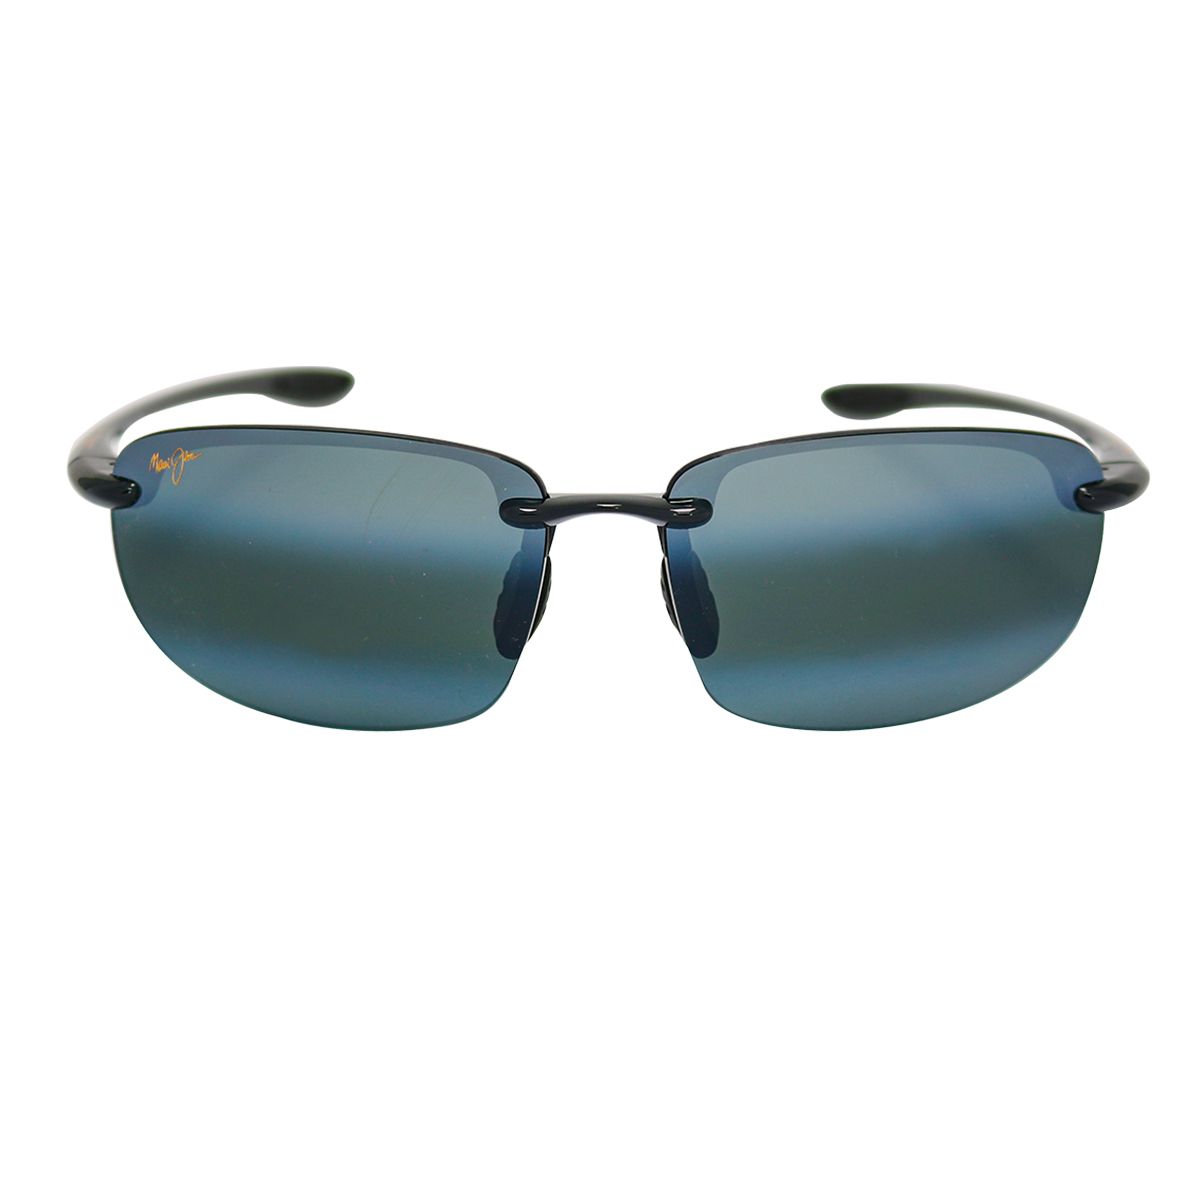 MJ407N Oval Sunglasses 2 - size 64